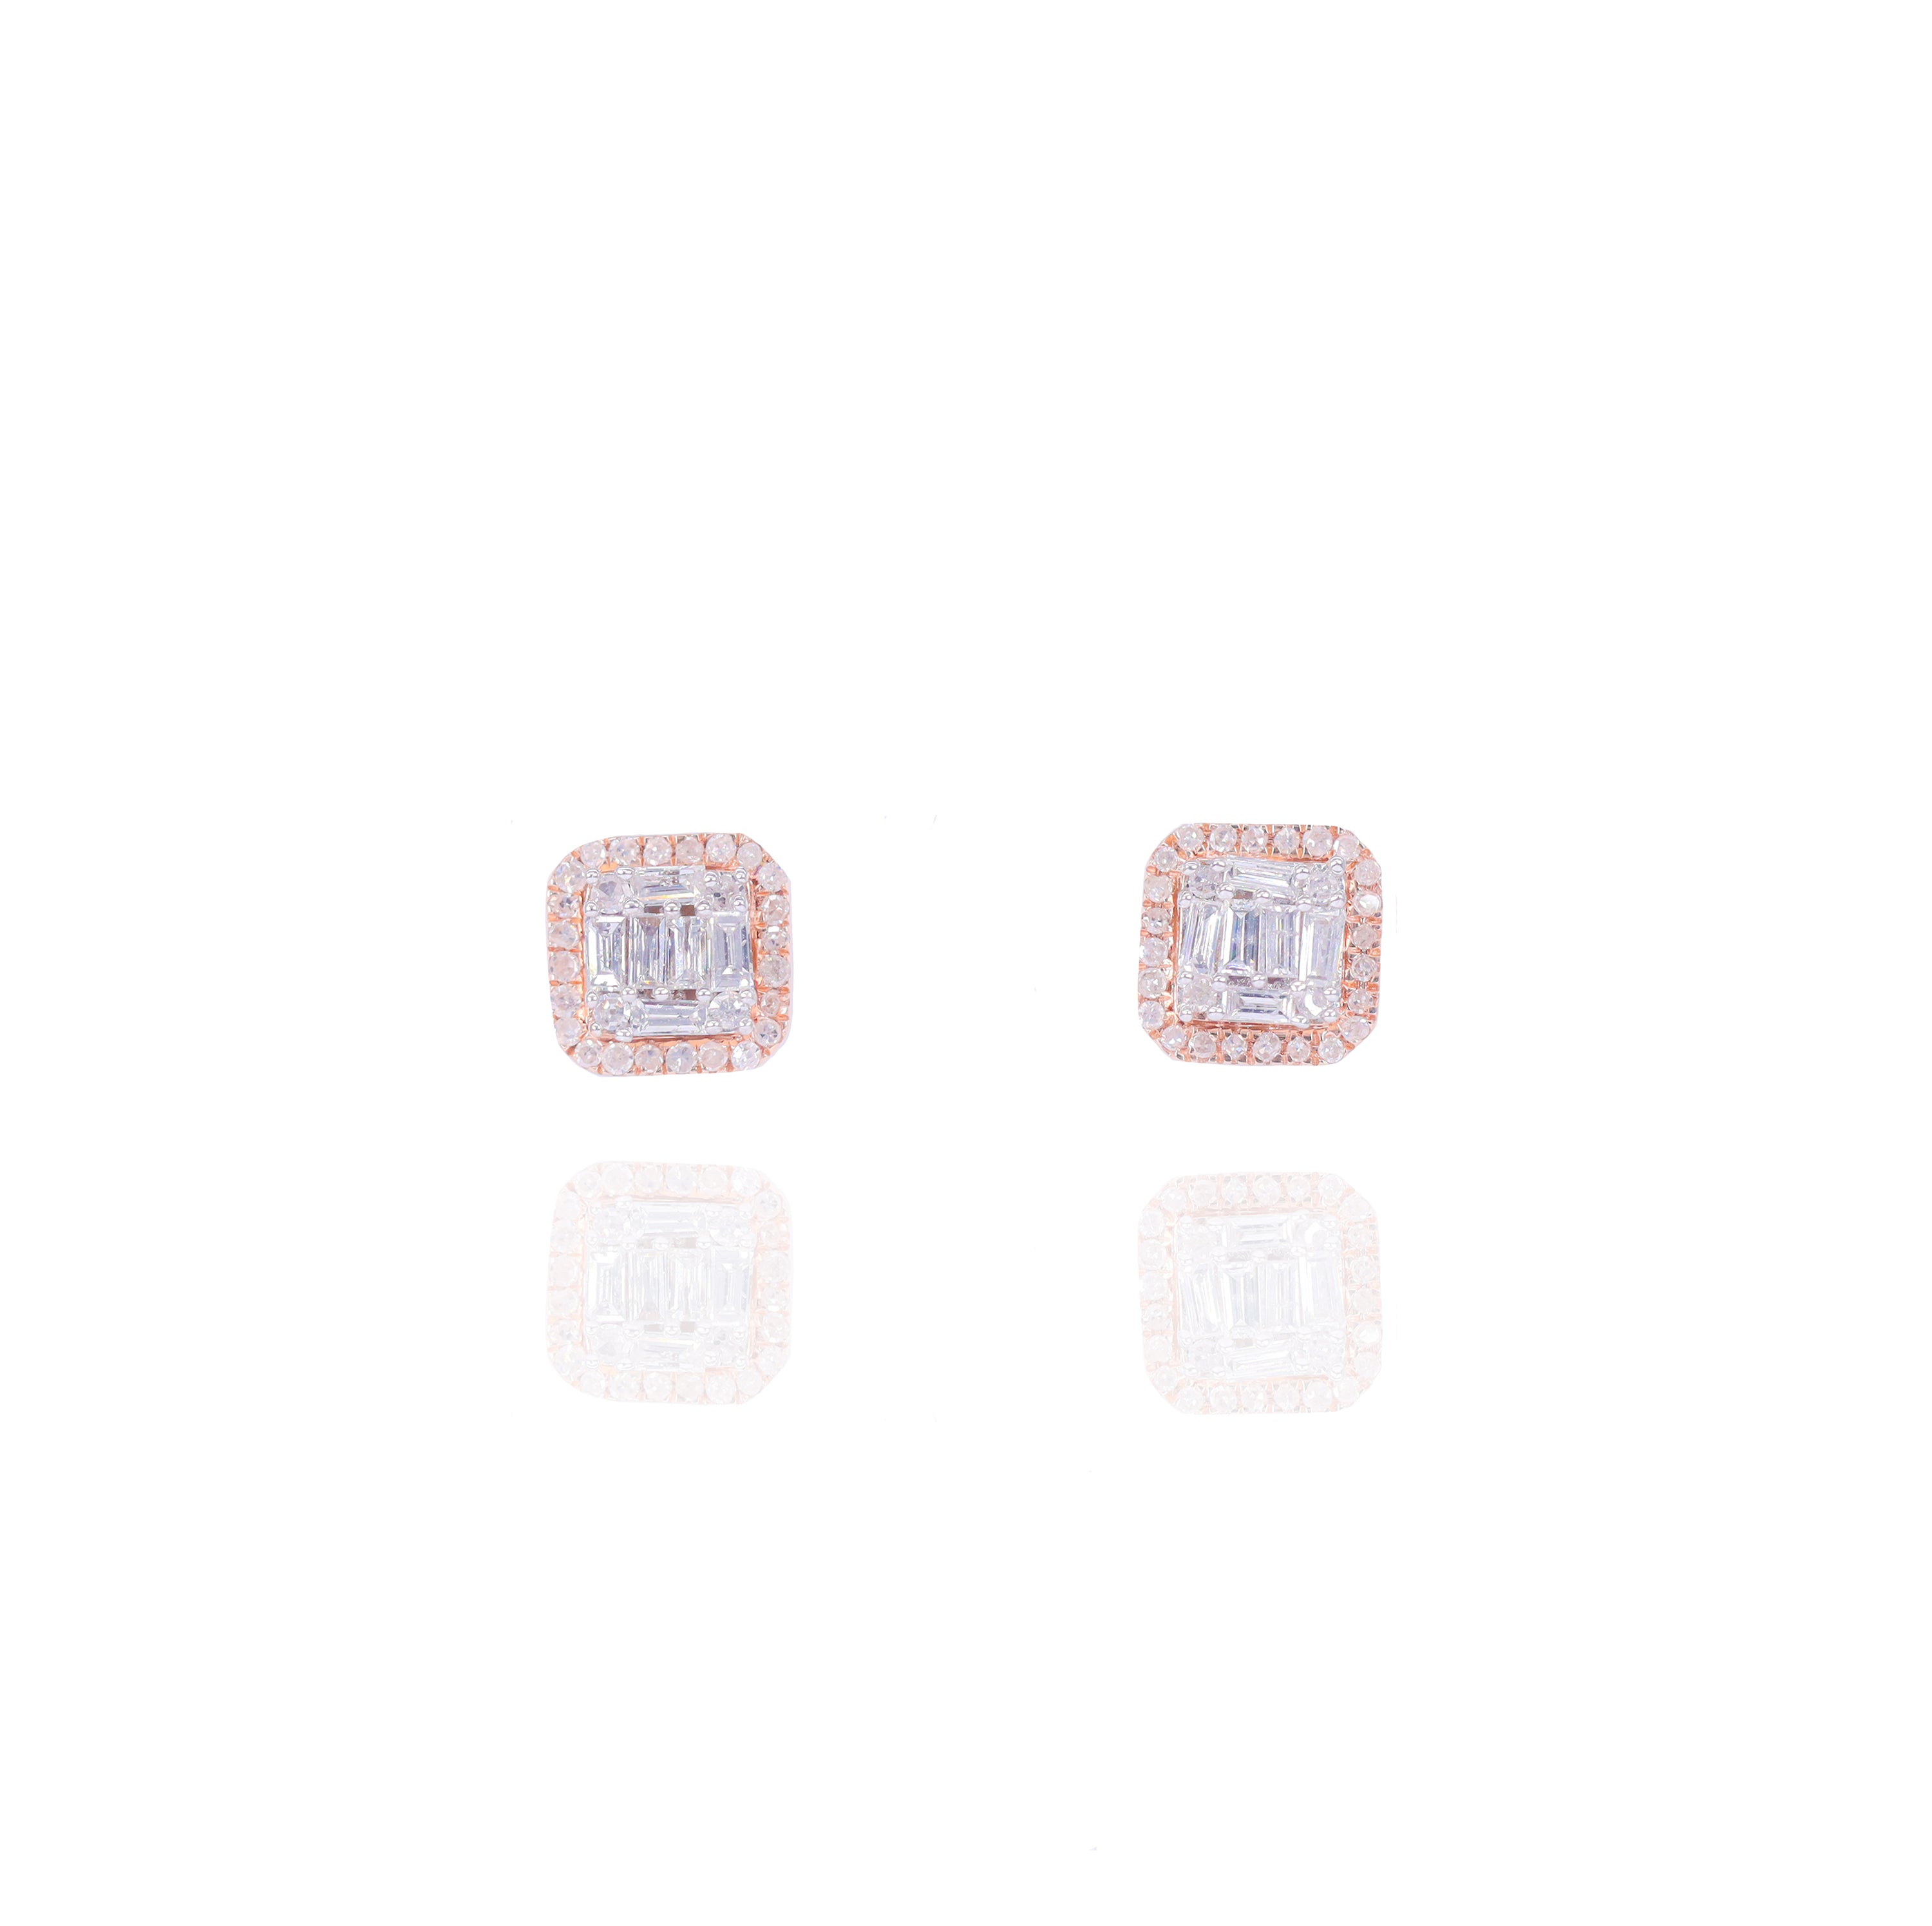 Two-Tone Square Baguette Diamond Earrings